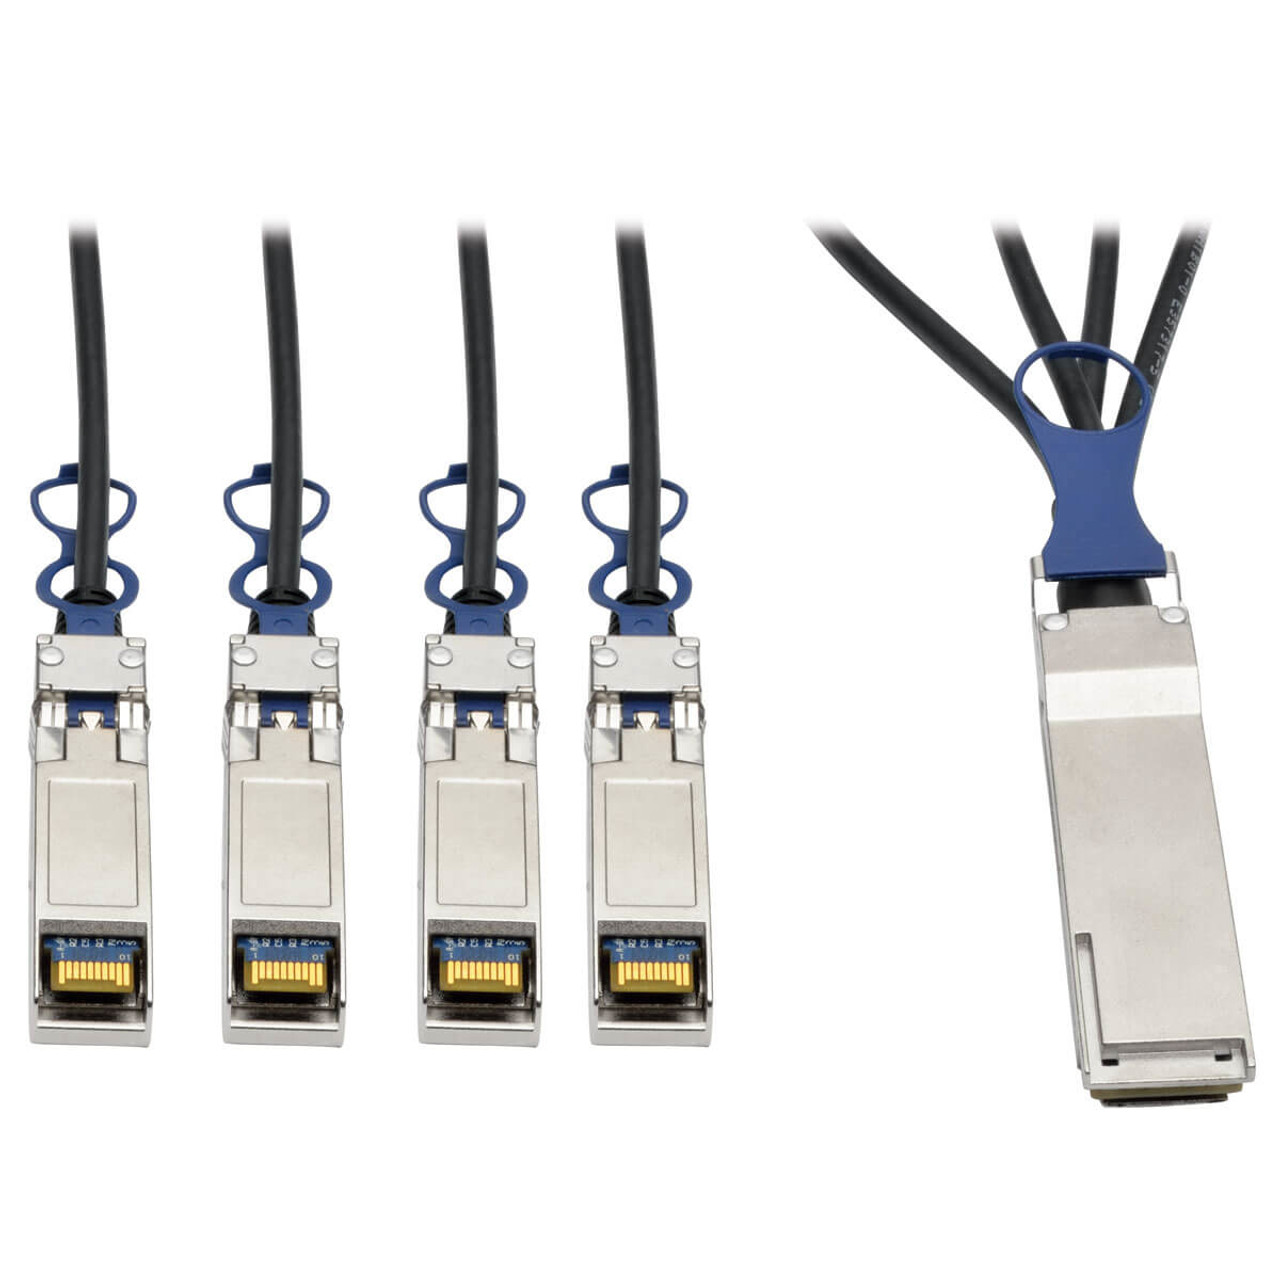 N281-02M-BK | Tripp Lite | QSFP+ - 4xSFP+, m-m, 2m InfiniBand cable 78.7" (2 m) QSFP+ 4xSFP+ Black, Blue, Metallic